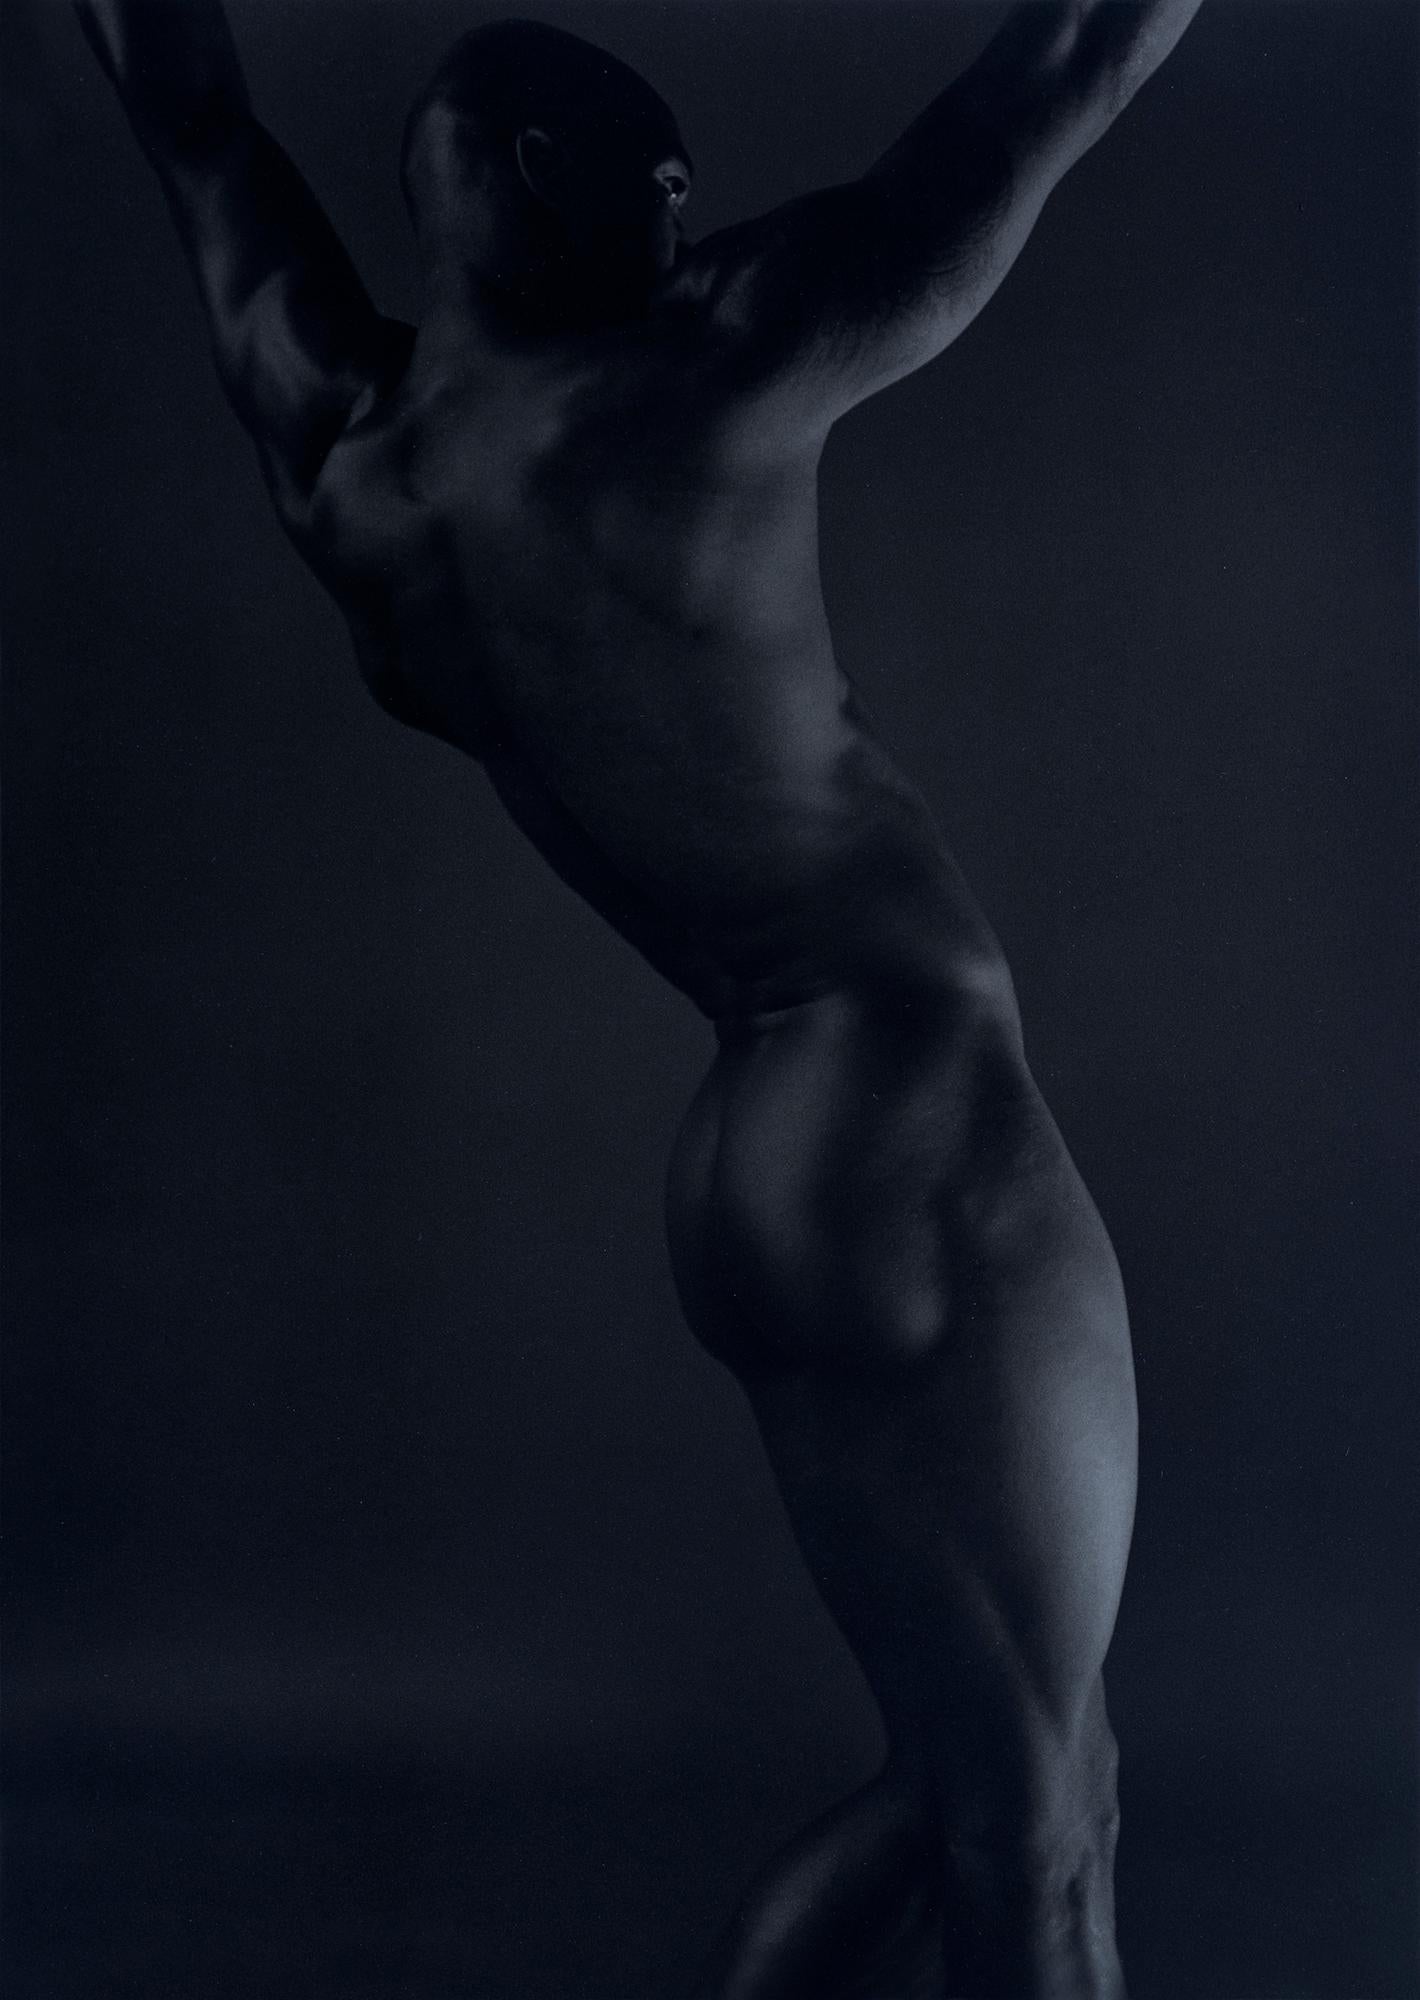 John Casado Nude Photograph – Ohne Titel 20252 - Silbergelatineabzug aus Lithsilber